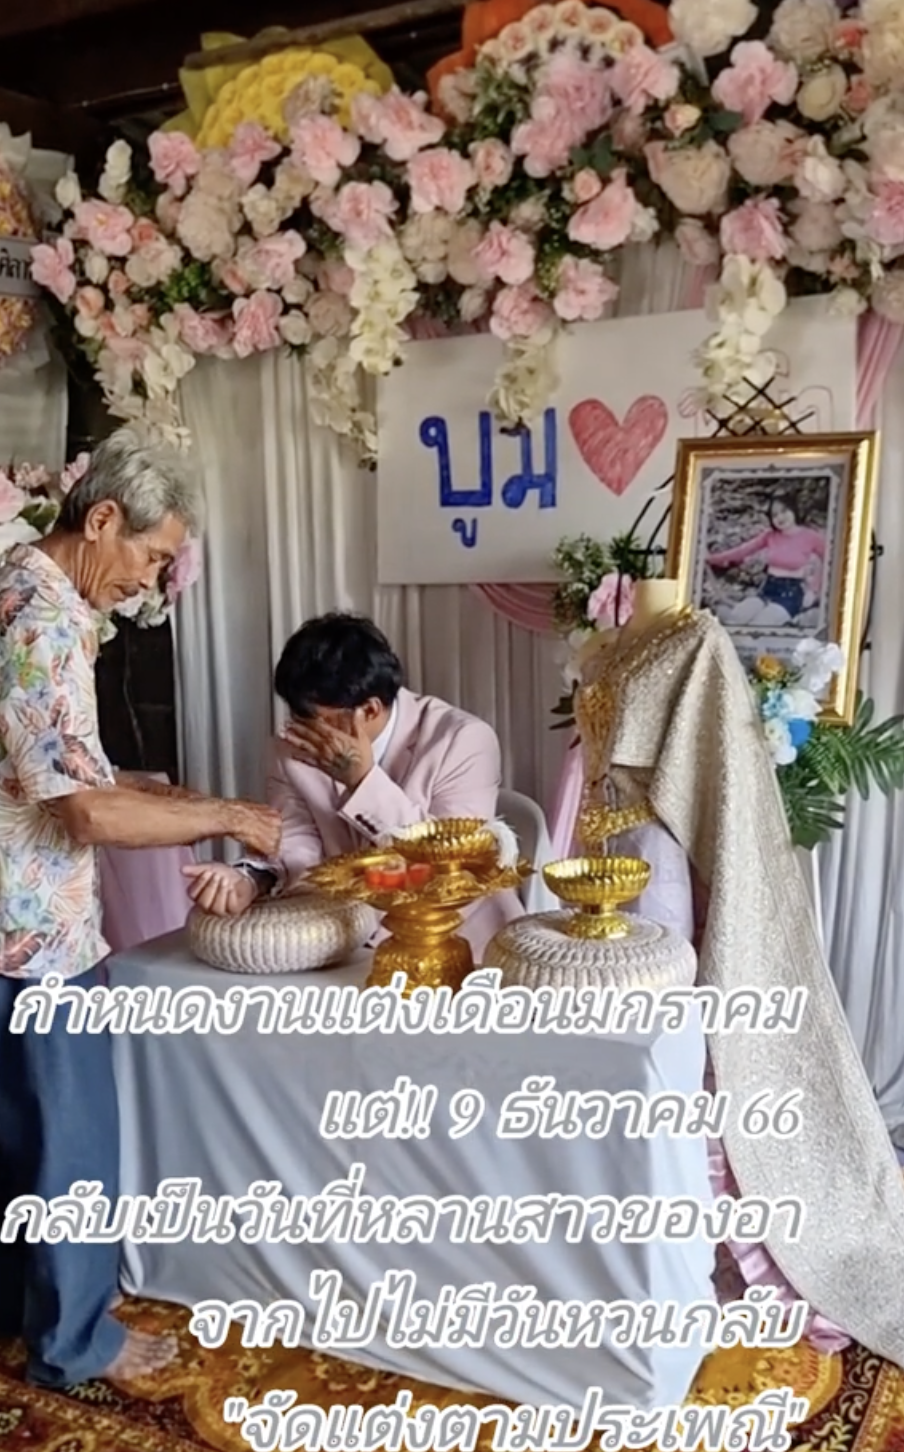 Thai man holds wedding with deceased gf 2